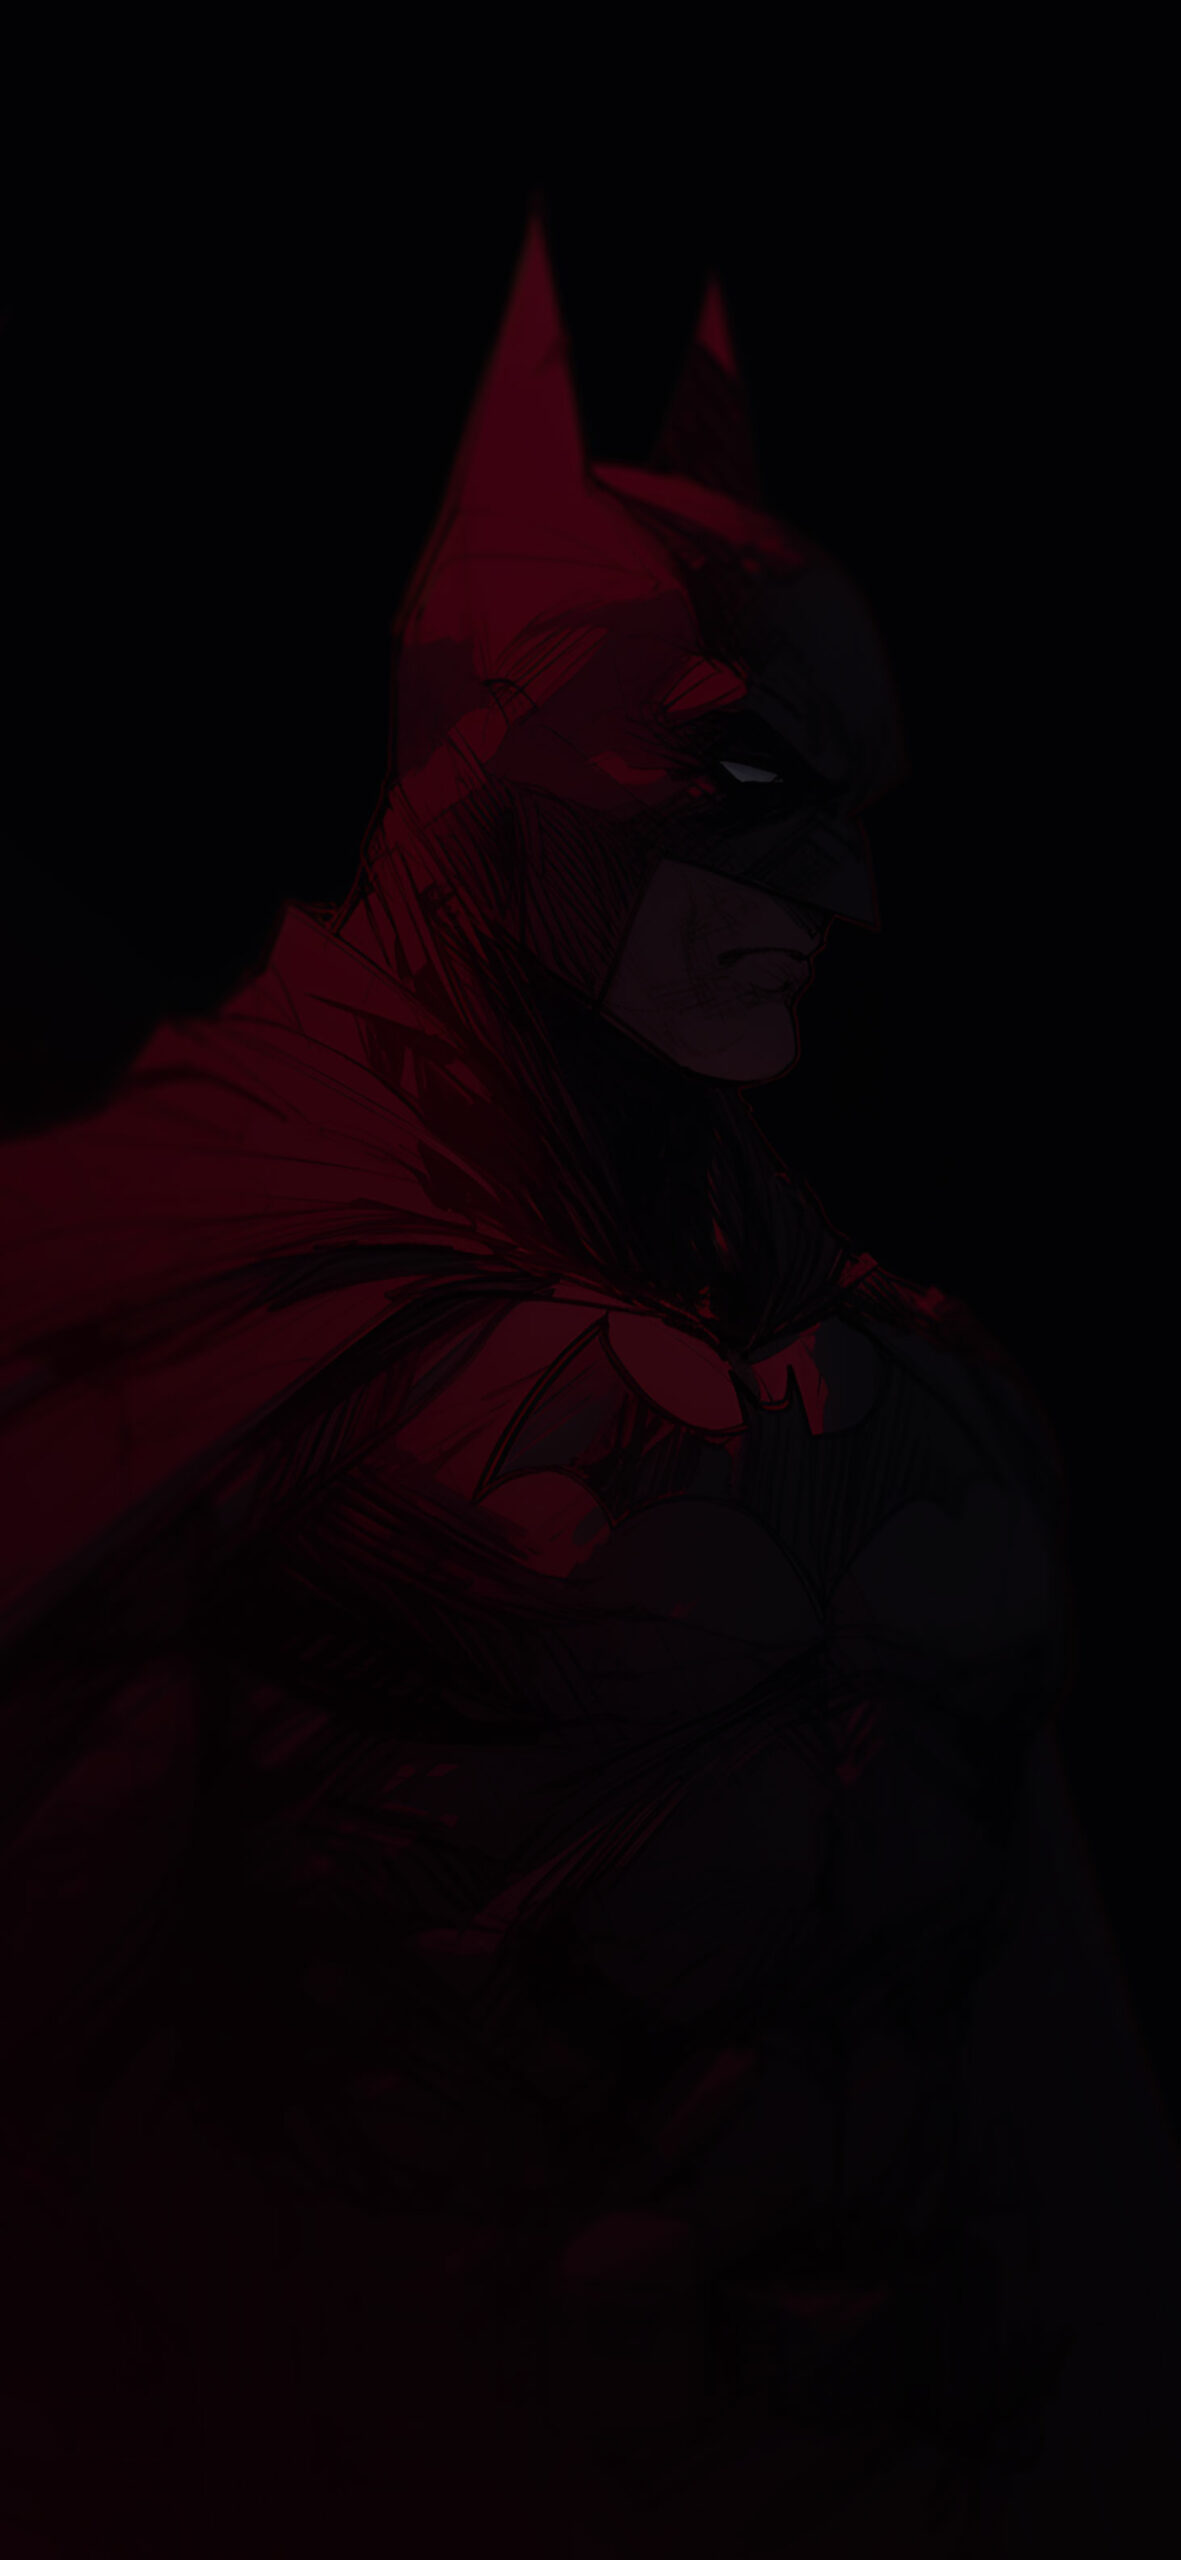 DC batman black & red sketch wallpaper Comics superhero art wa